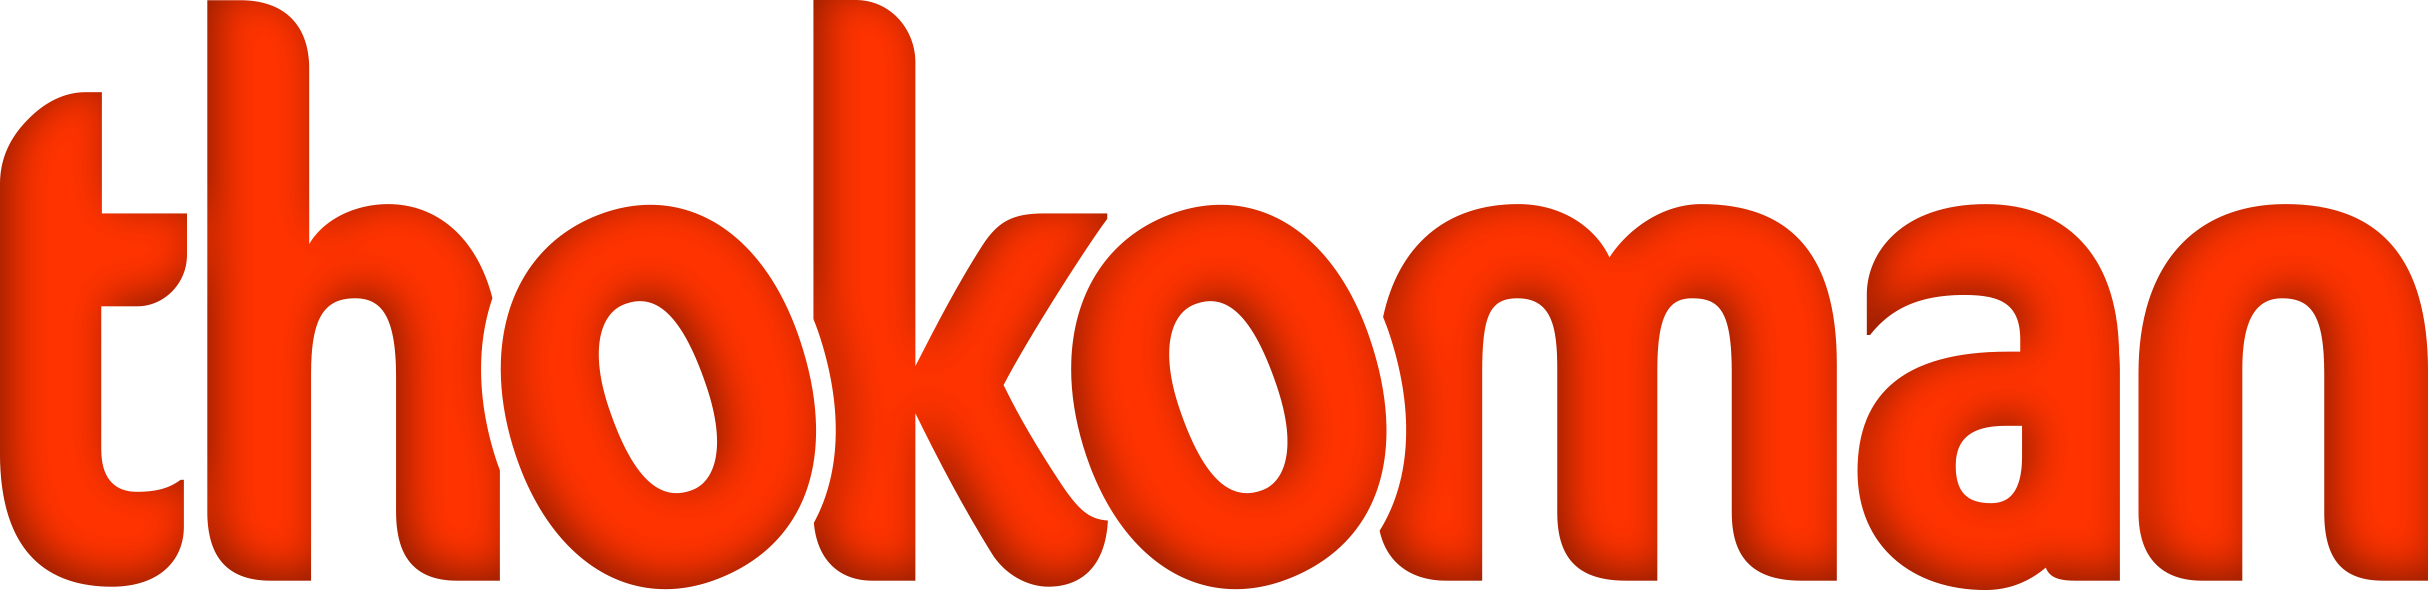 Thokoman Foods Logo